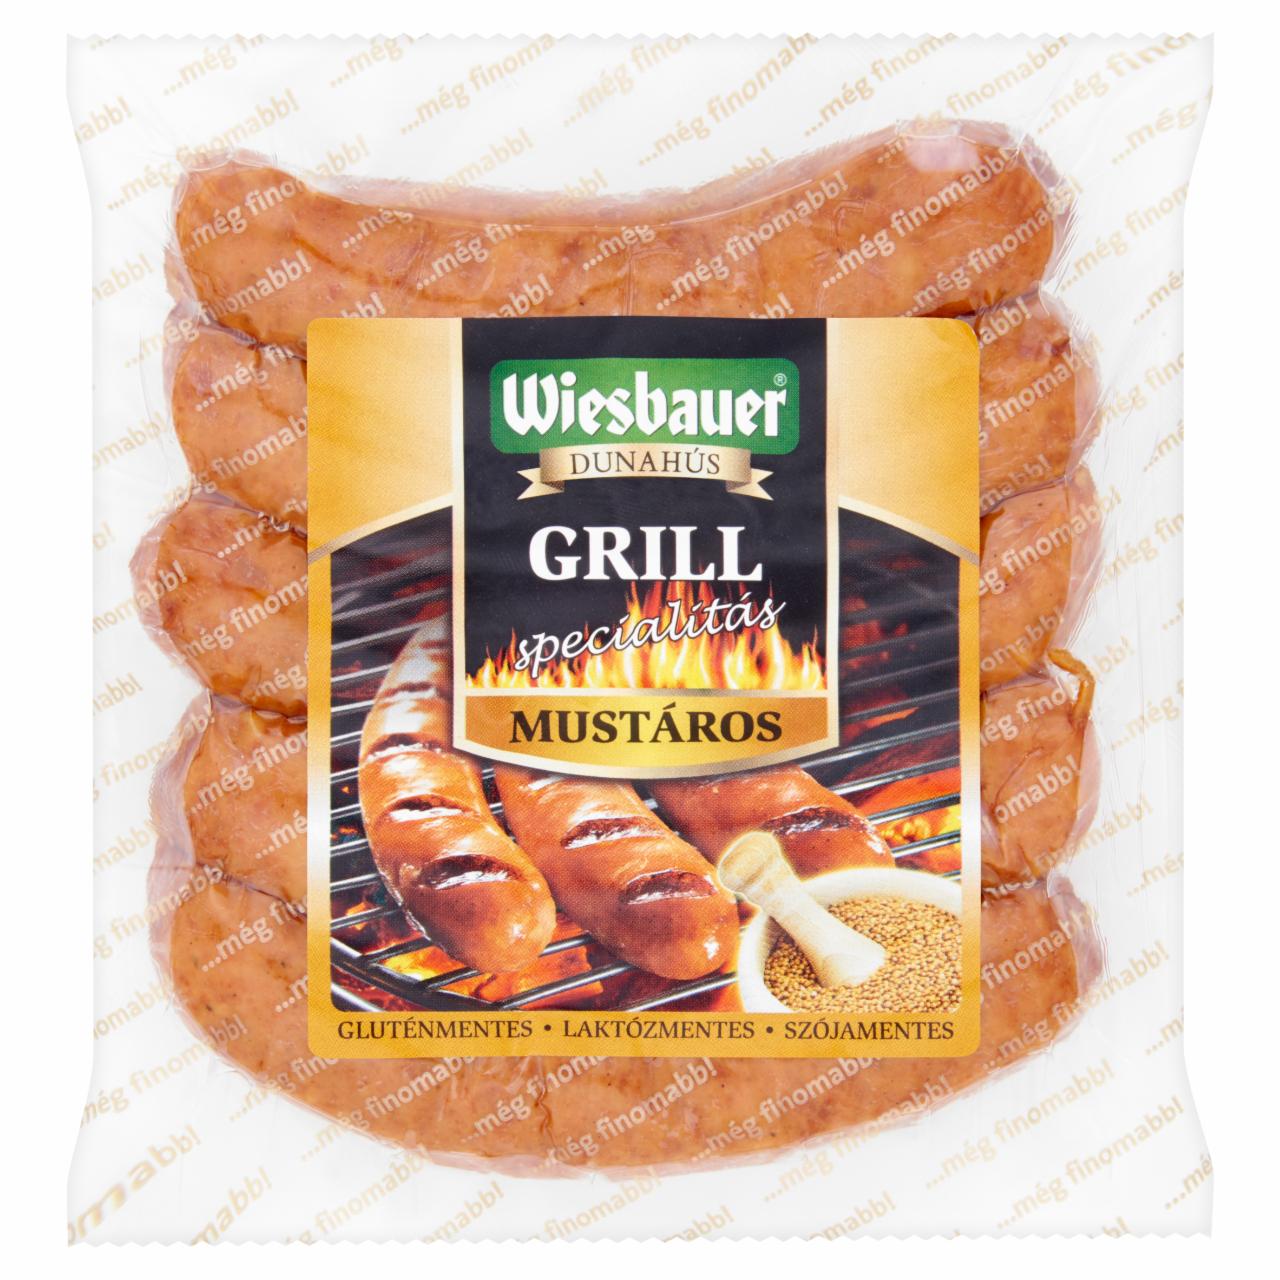 Képek - Wiesbauer mustáros grill specialitás 300 g